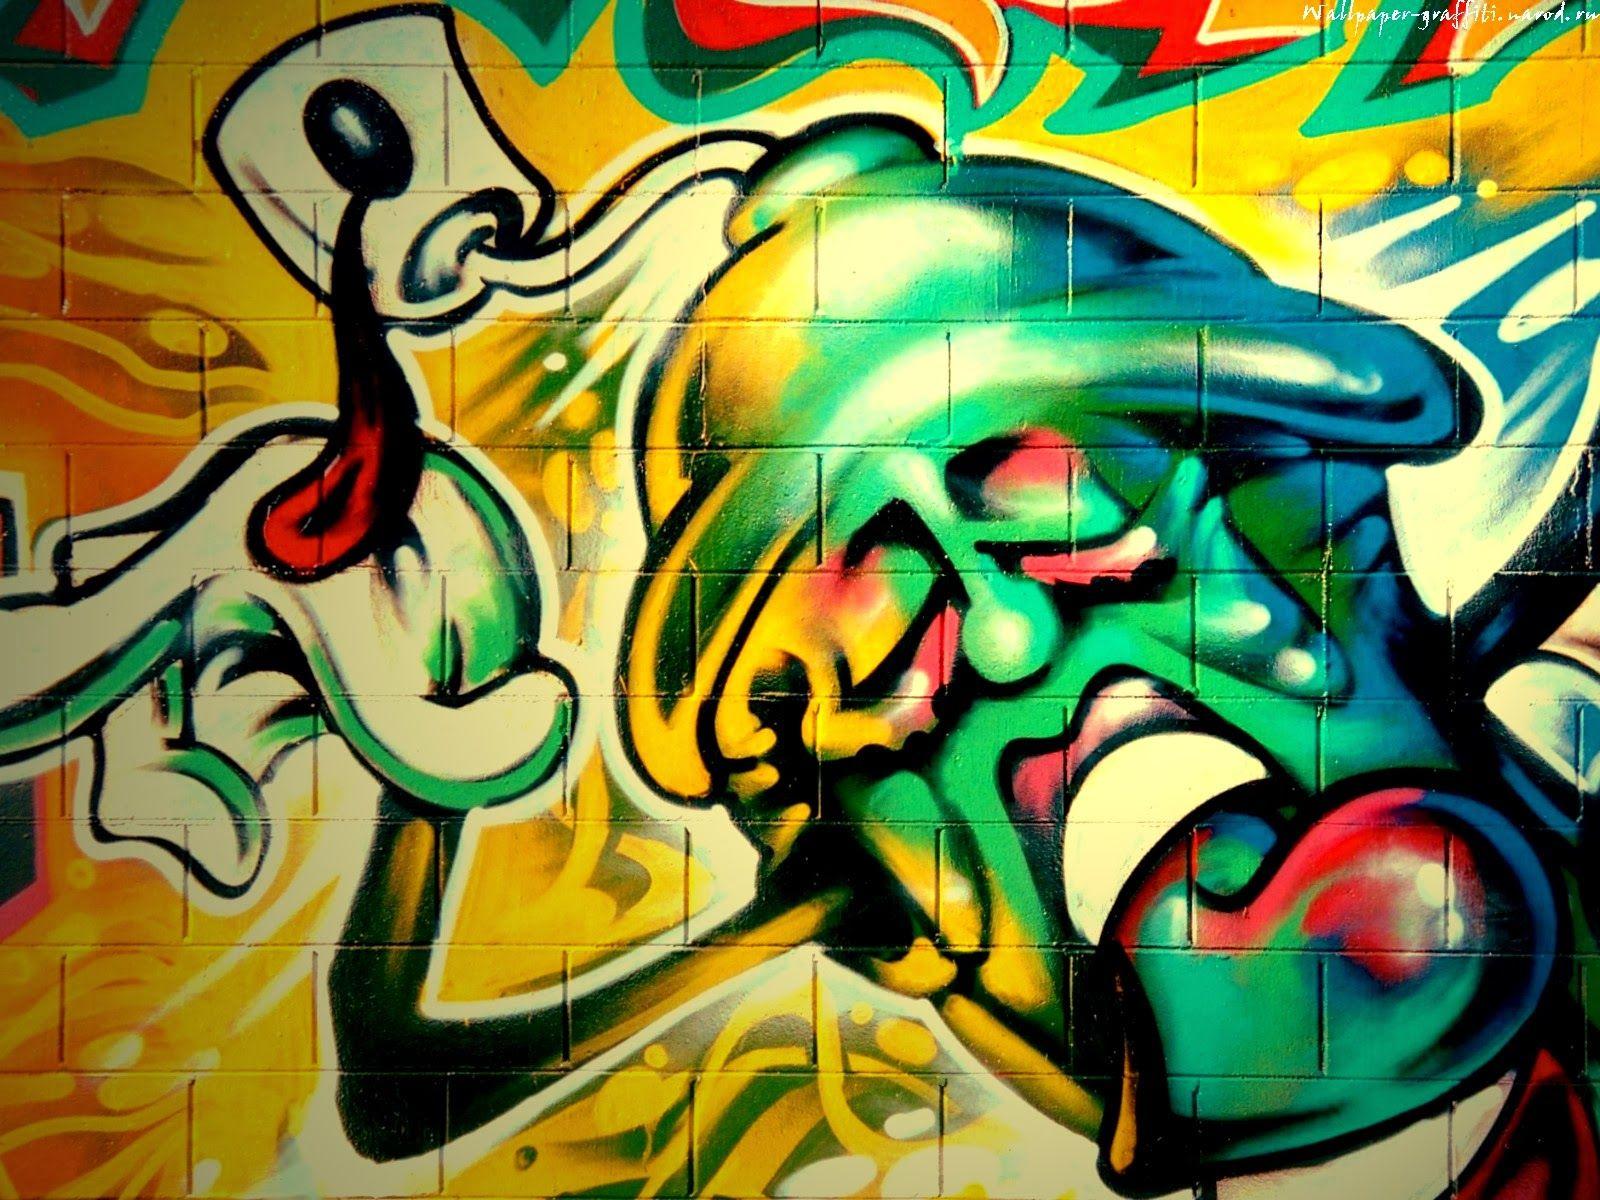 Graffiti Wall: Graffiti Wallpapers